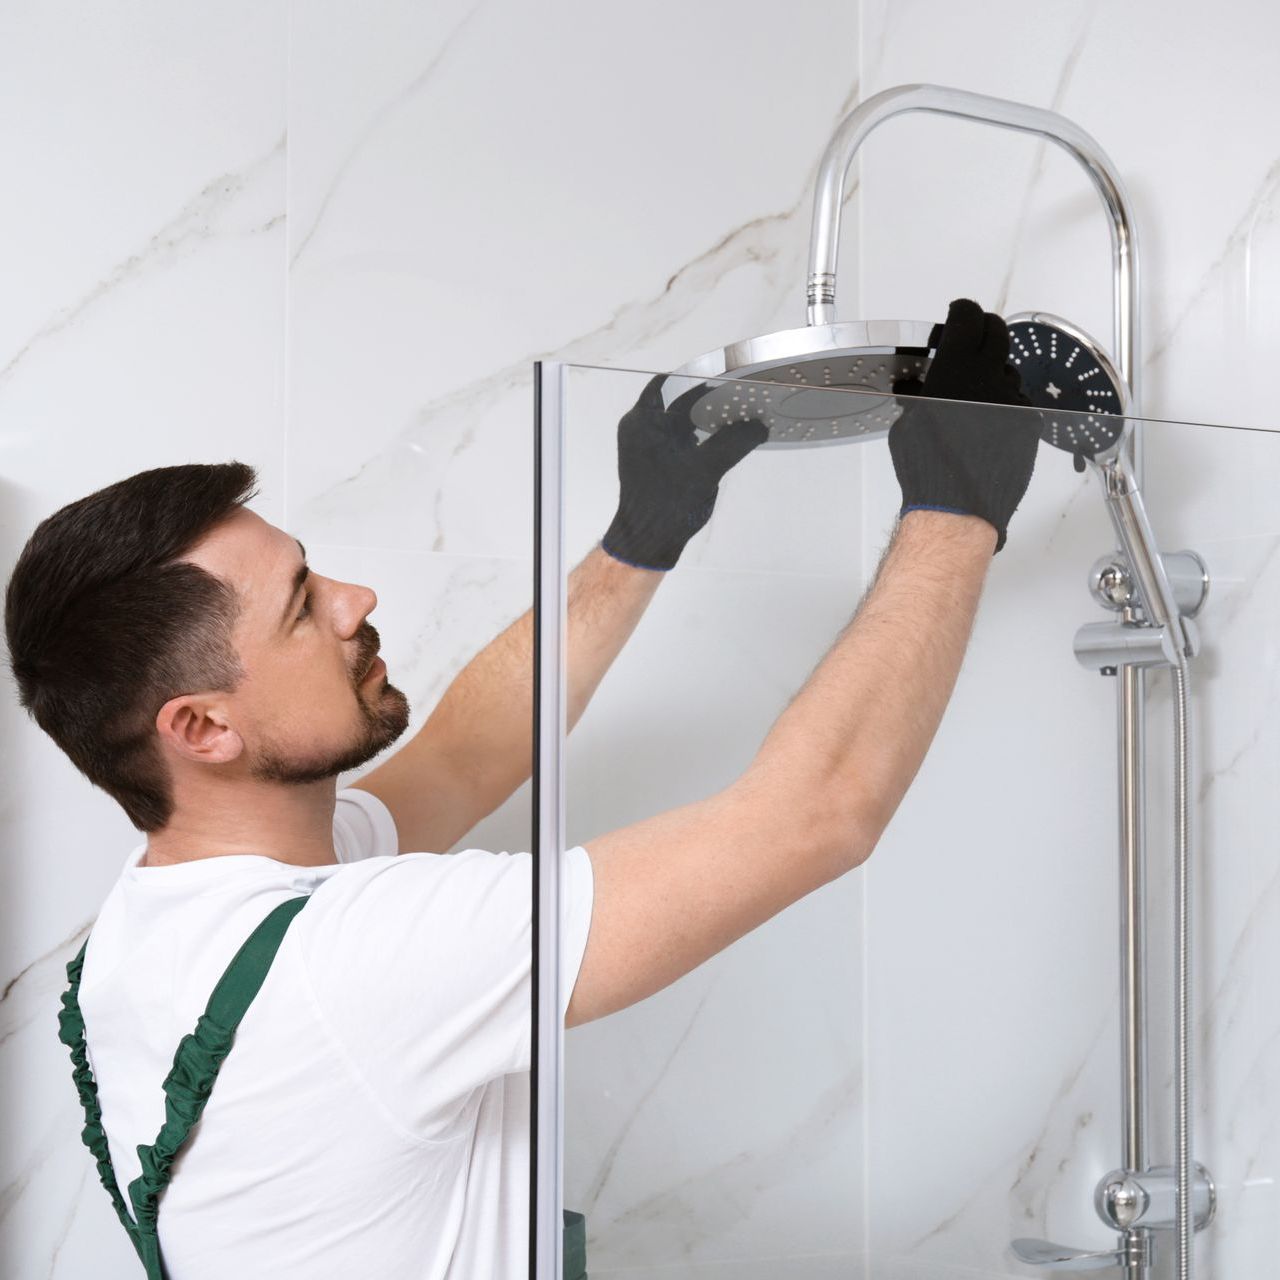 plumber installing new modern shower head during bathroom renovation project